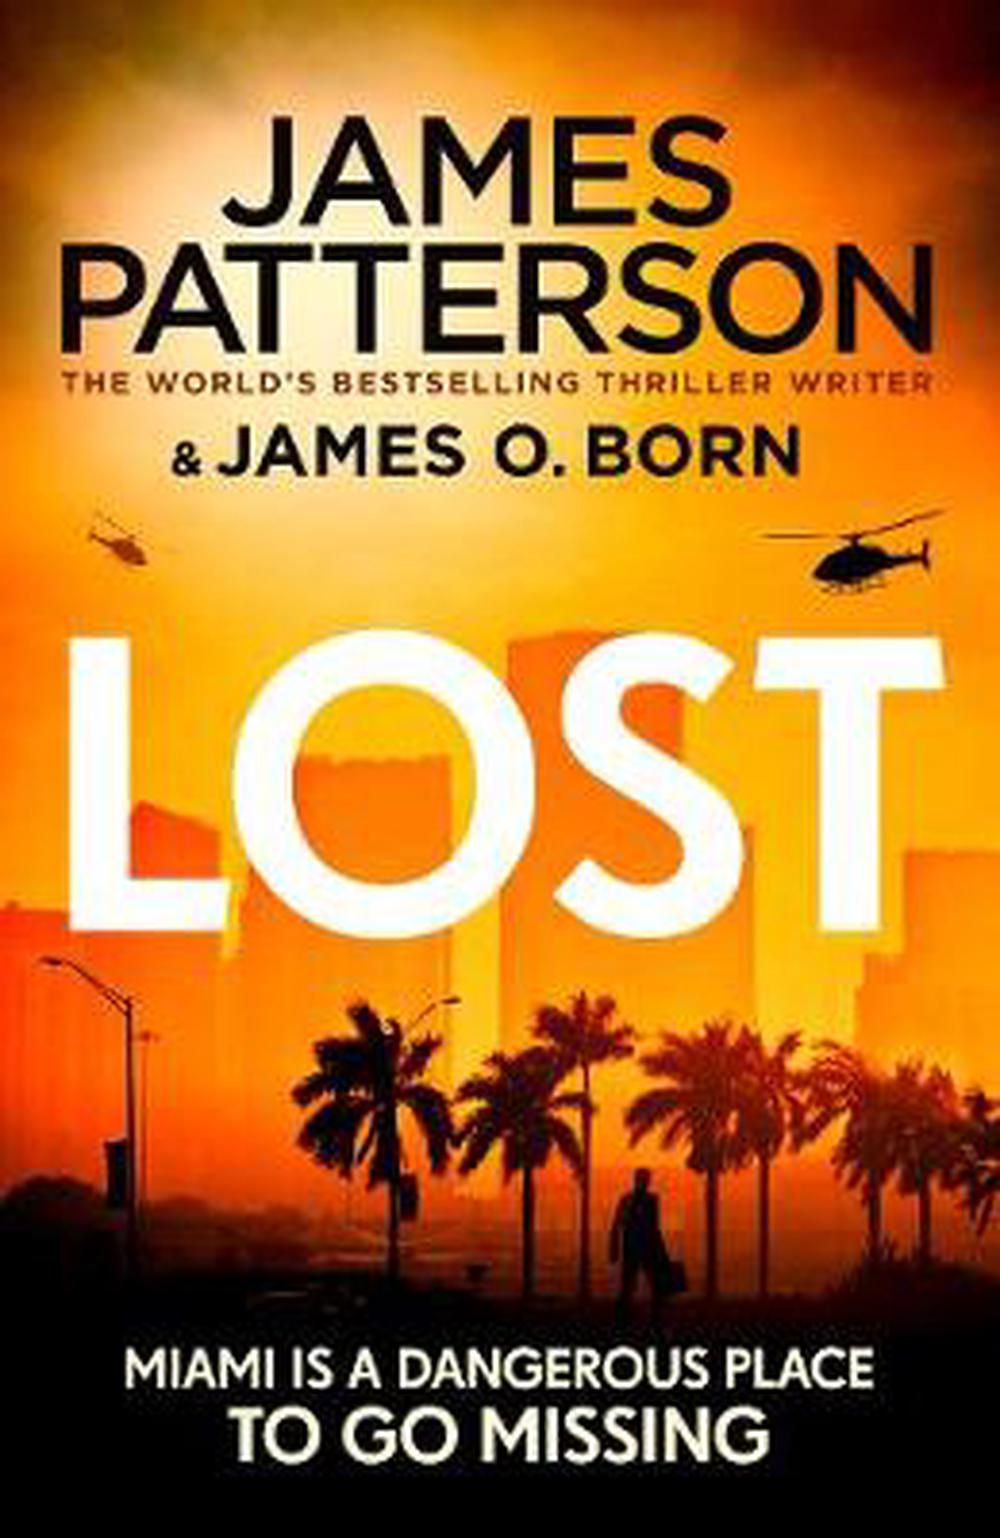 read james patterson books free online